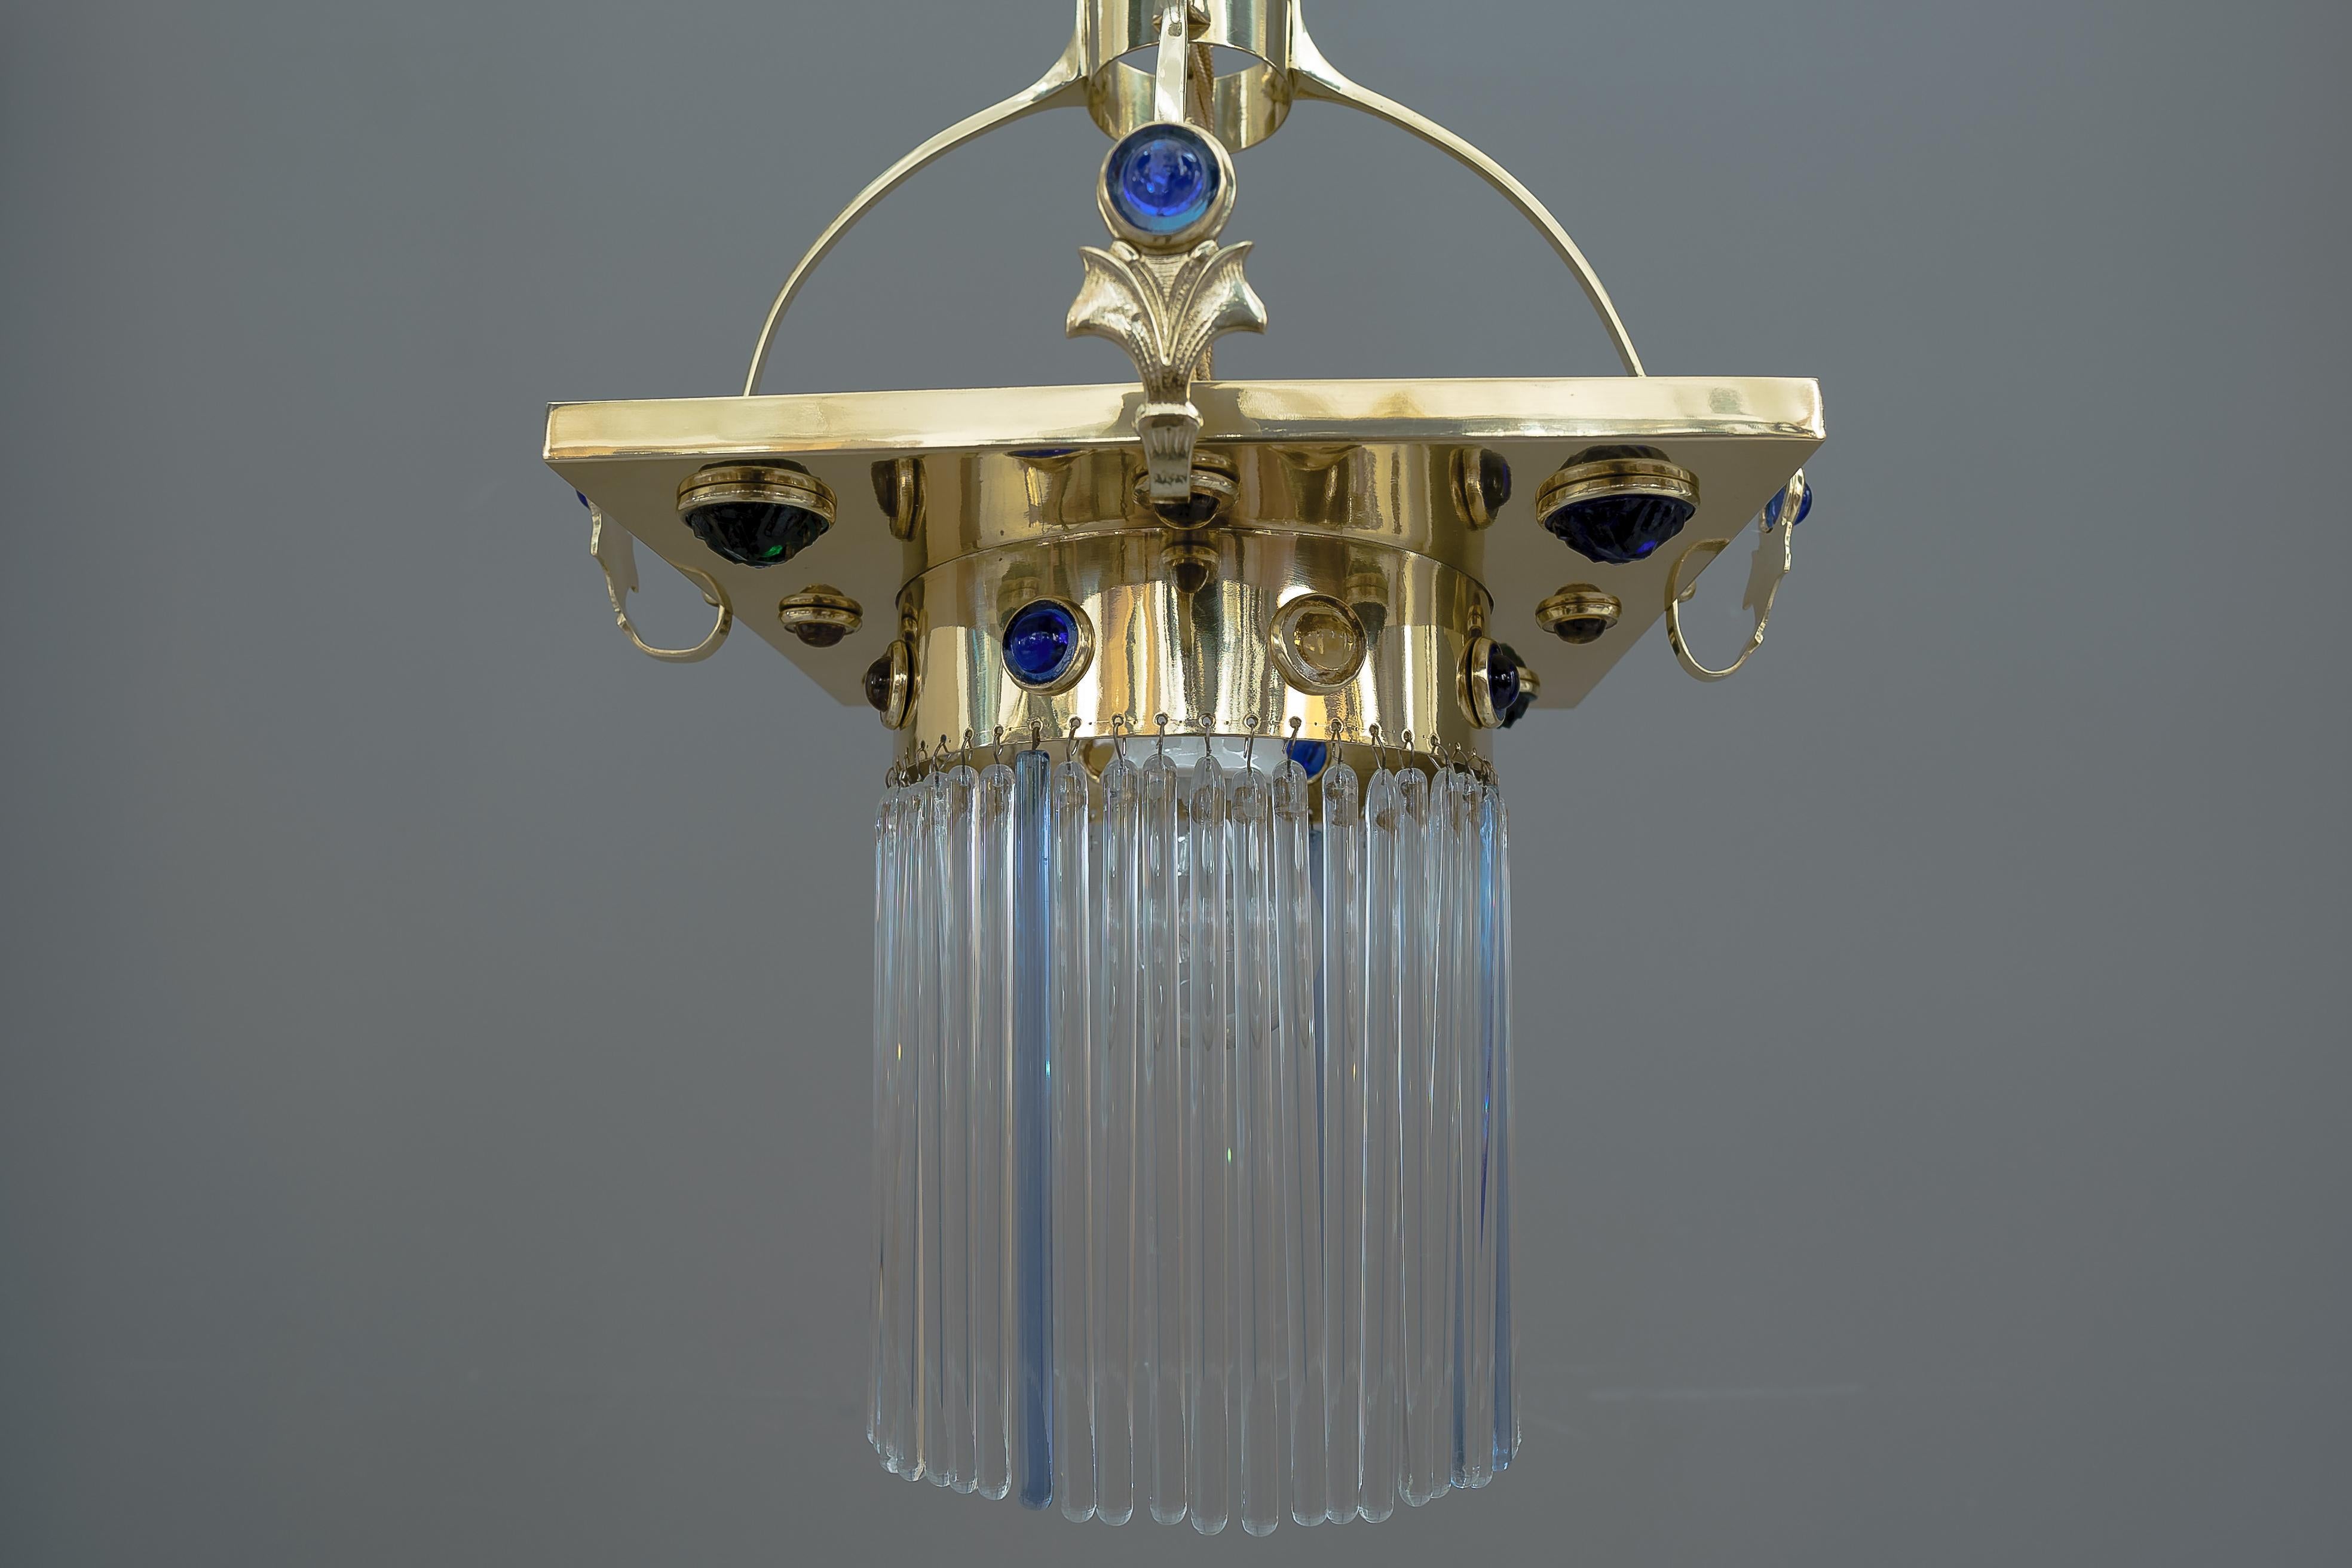 Jugendstil pendant with opaline glass stones and solid glass sticks, Vienna, 1908
Original glass sticks
Polished and stove enameled.